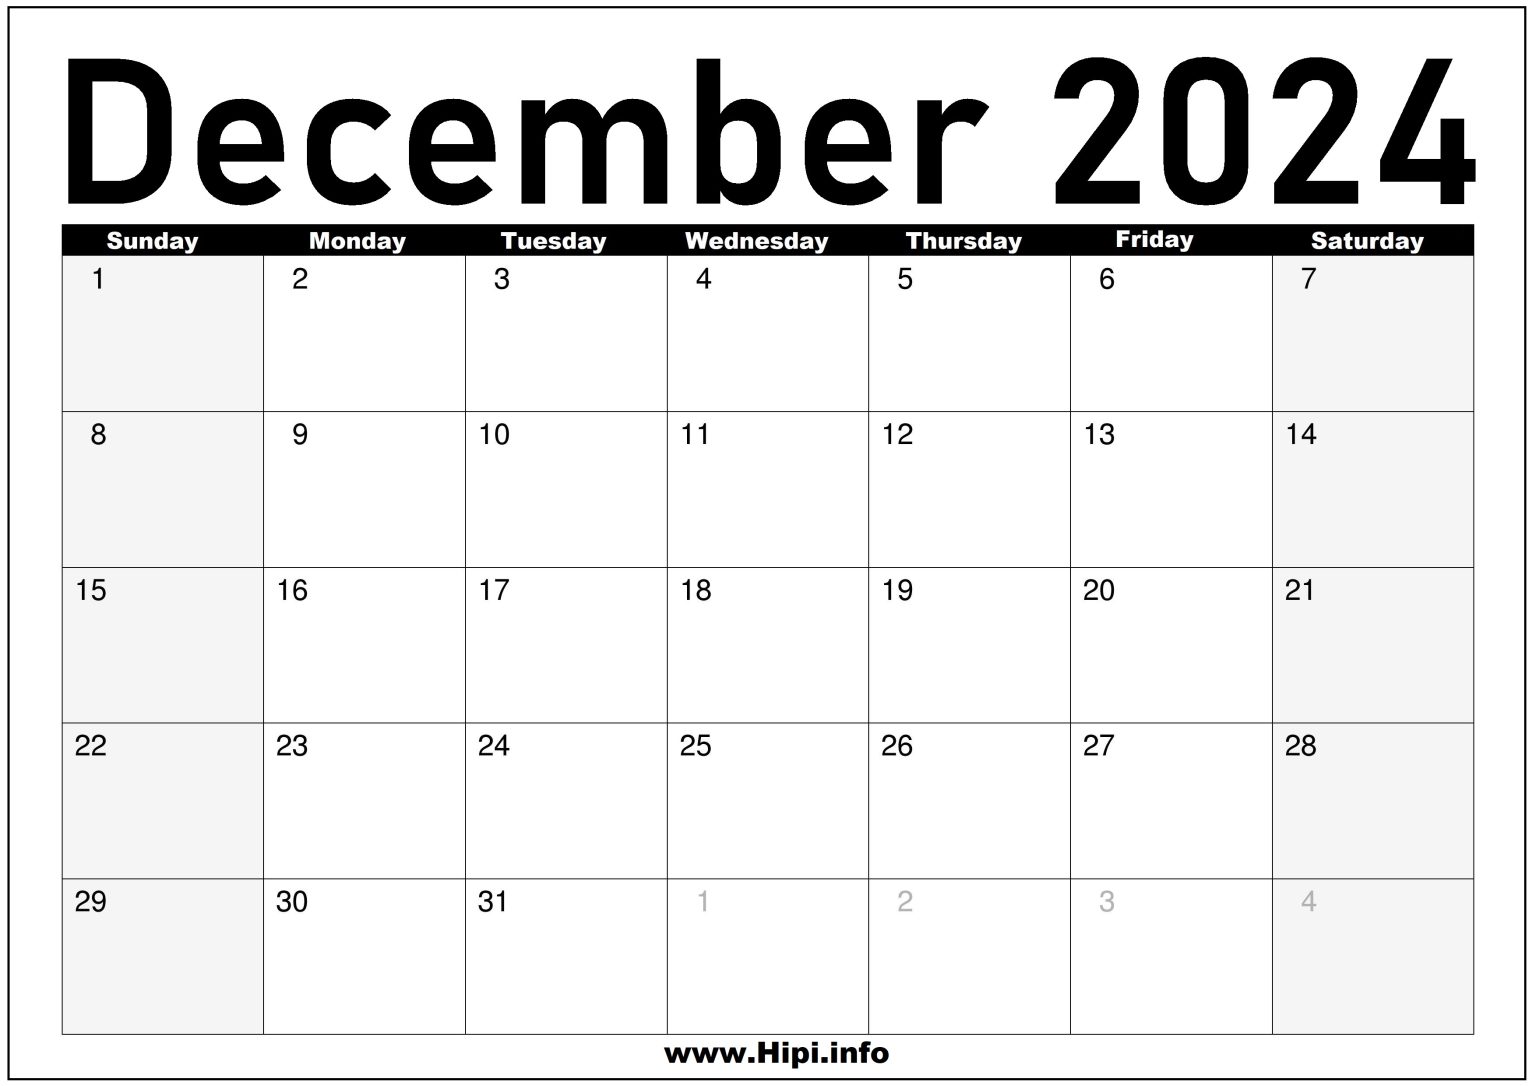 december-2024-monthly-calendar-hipi-info